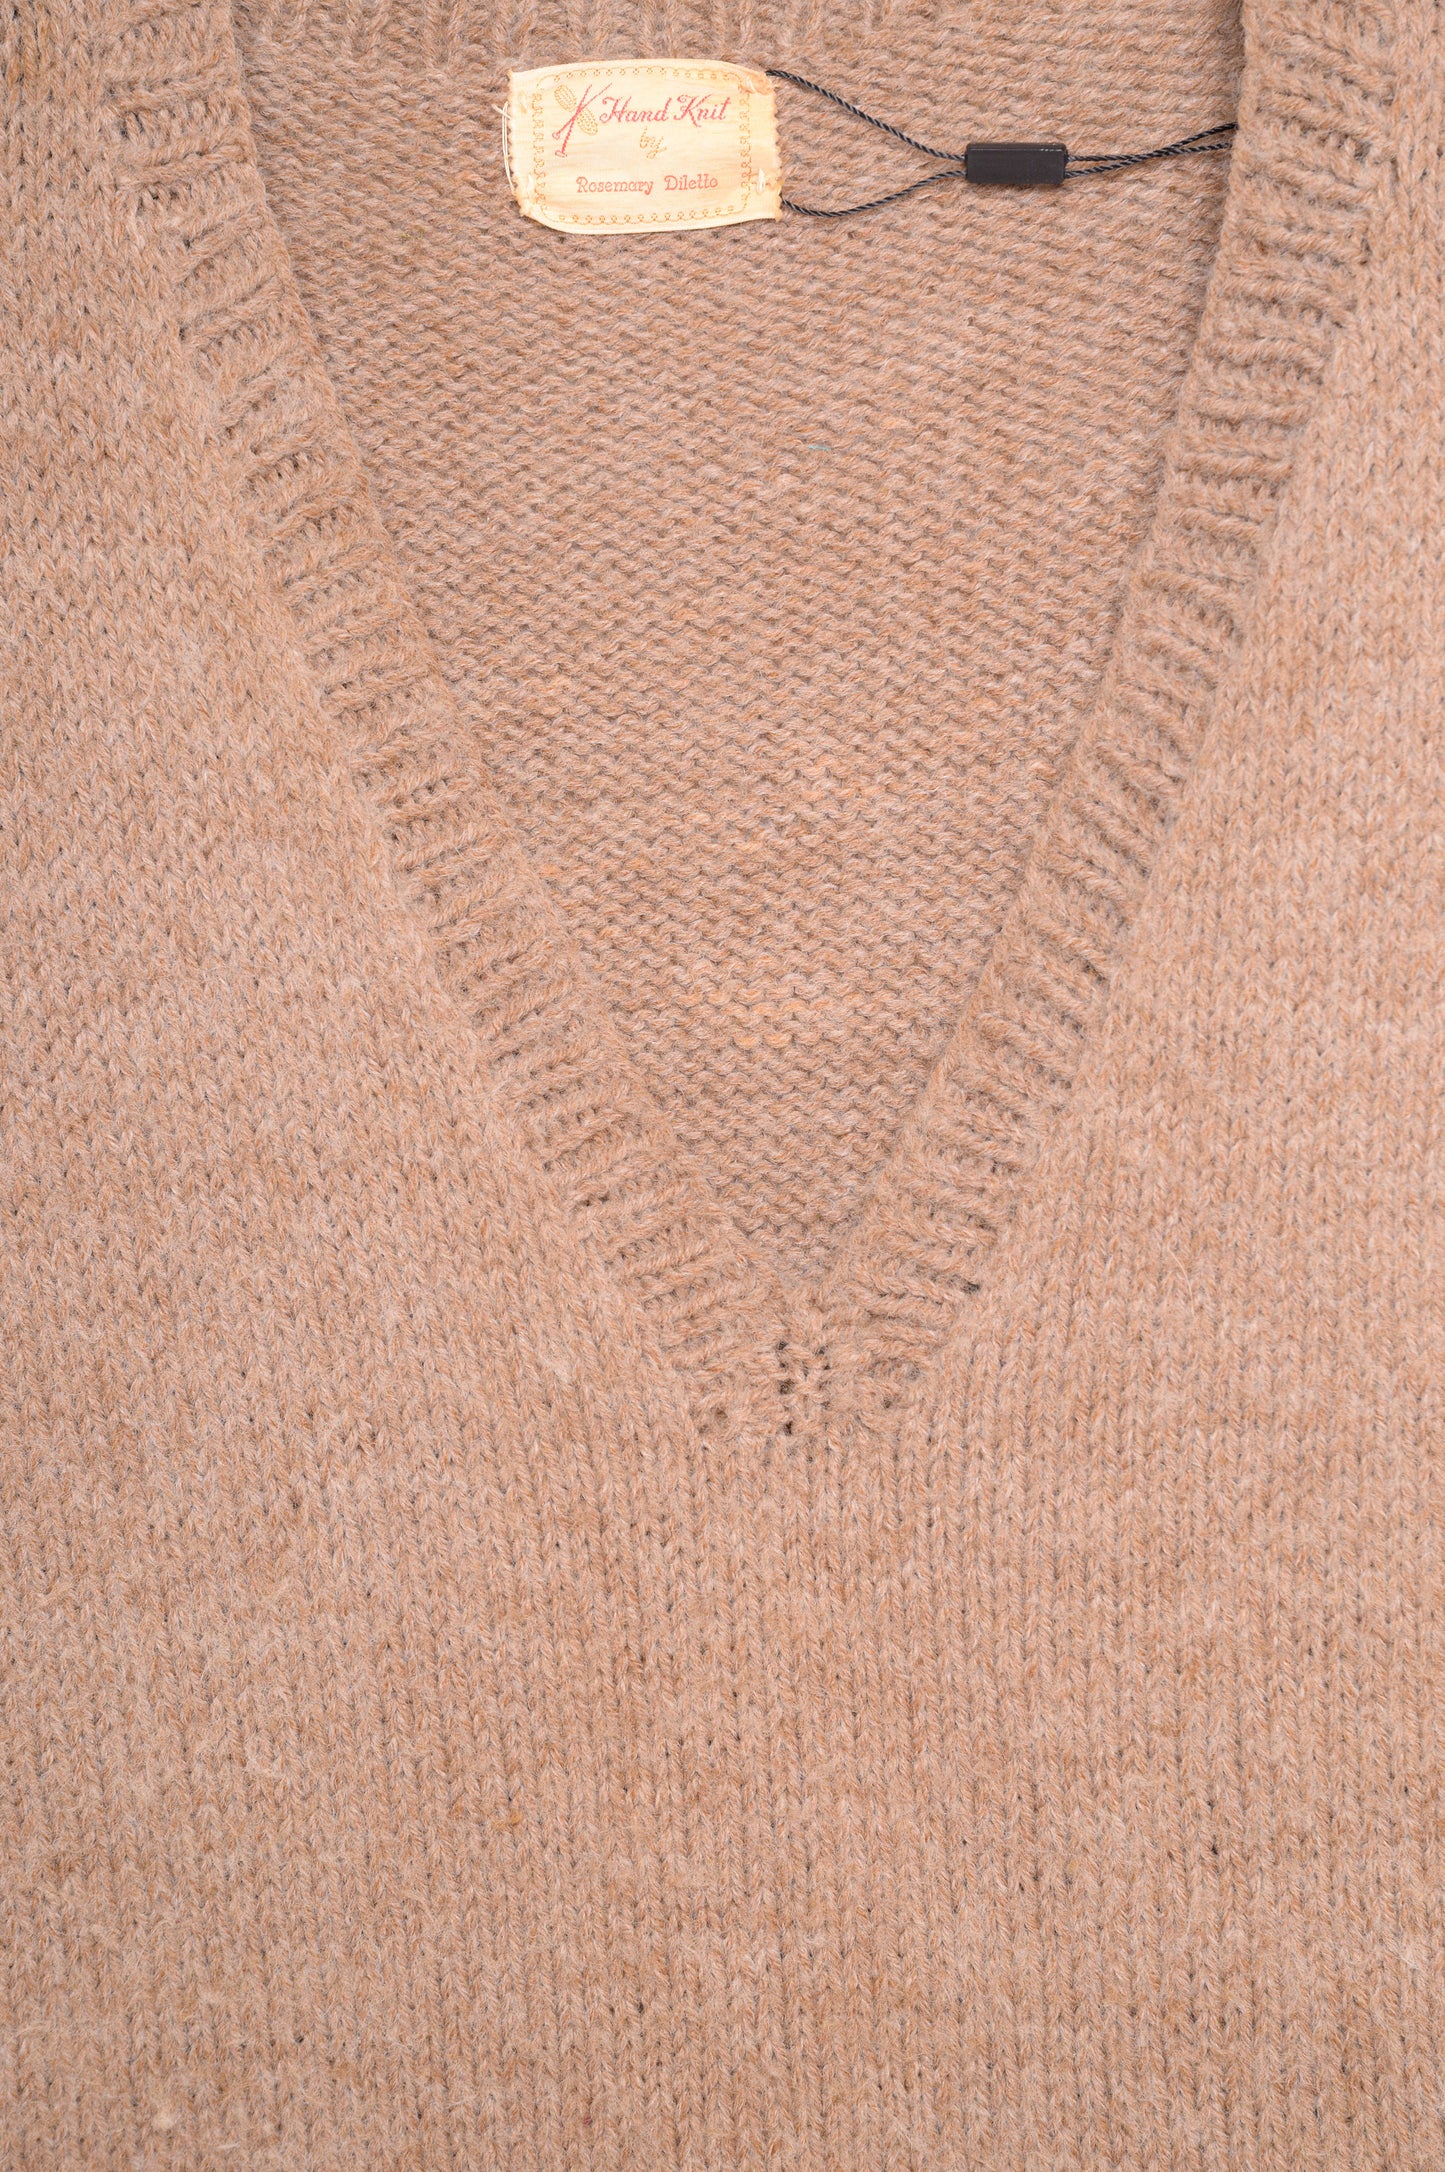 1950s Hand Knit Sweater Vest